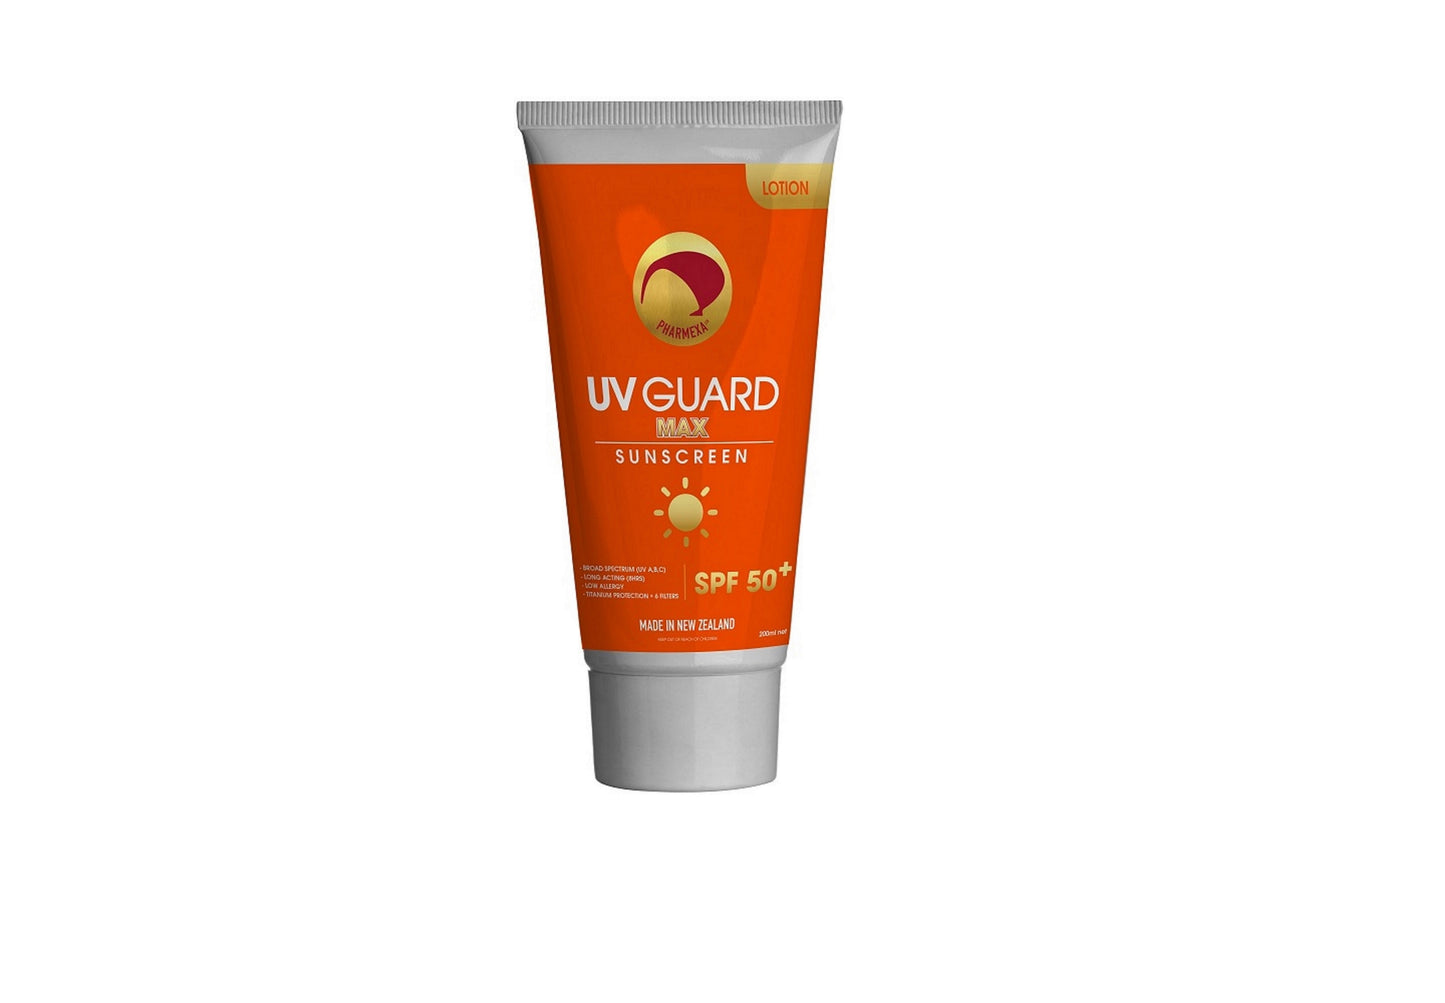 UV Guard MAX Sunscreen SPF 50+ 200ml Lotion.